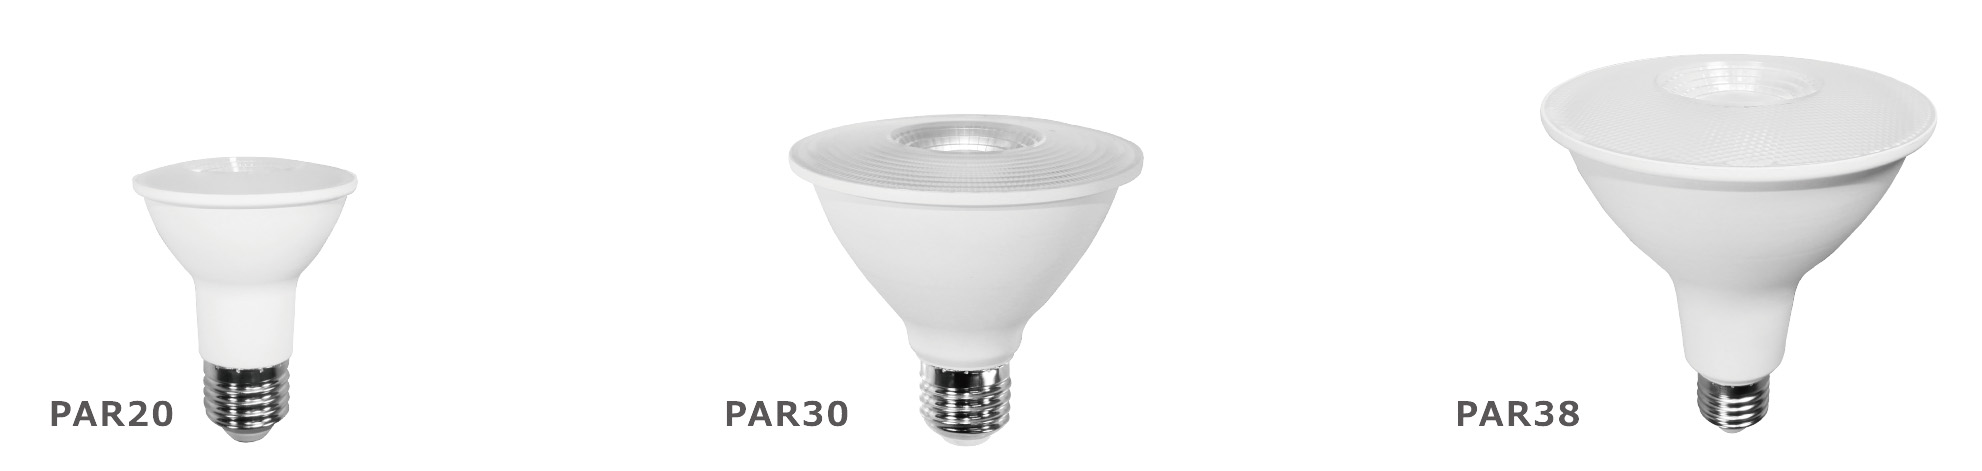 LED Bulb PAR38